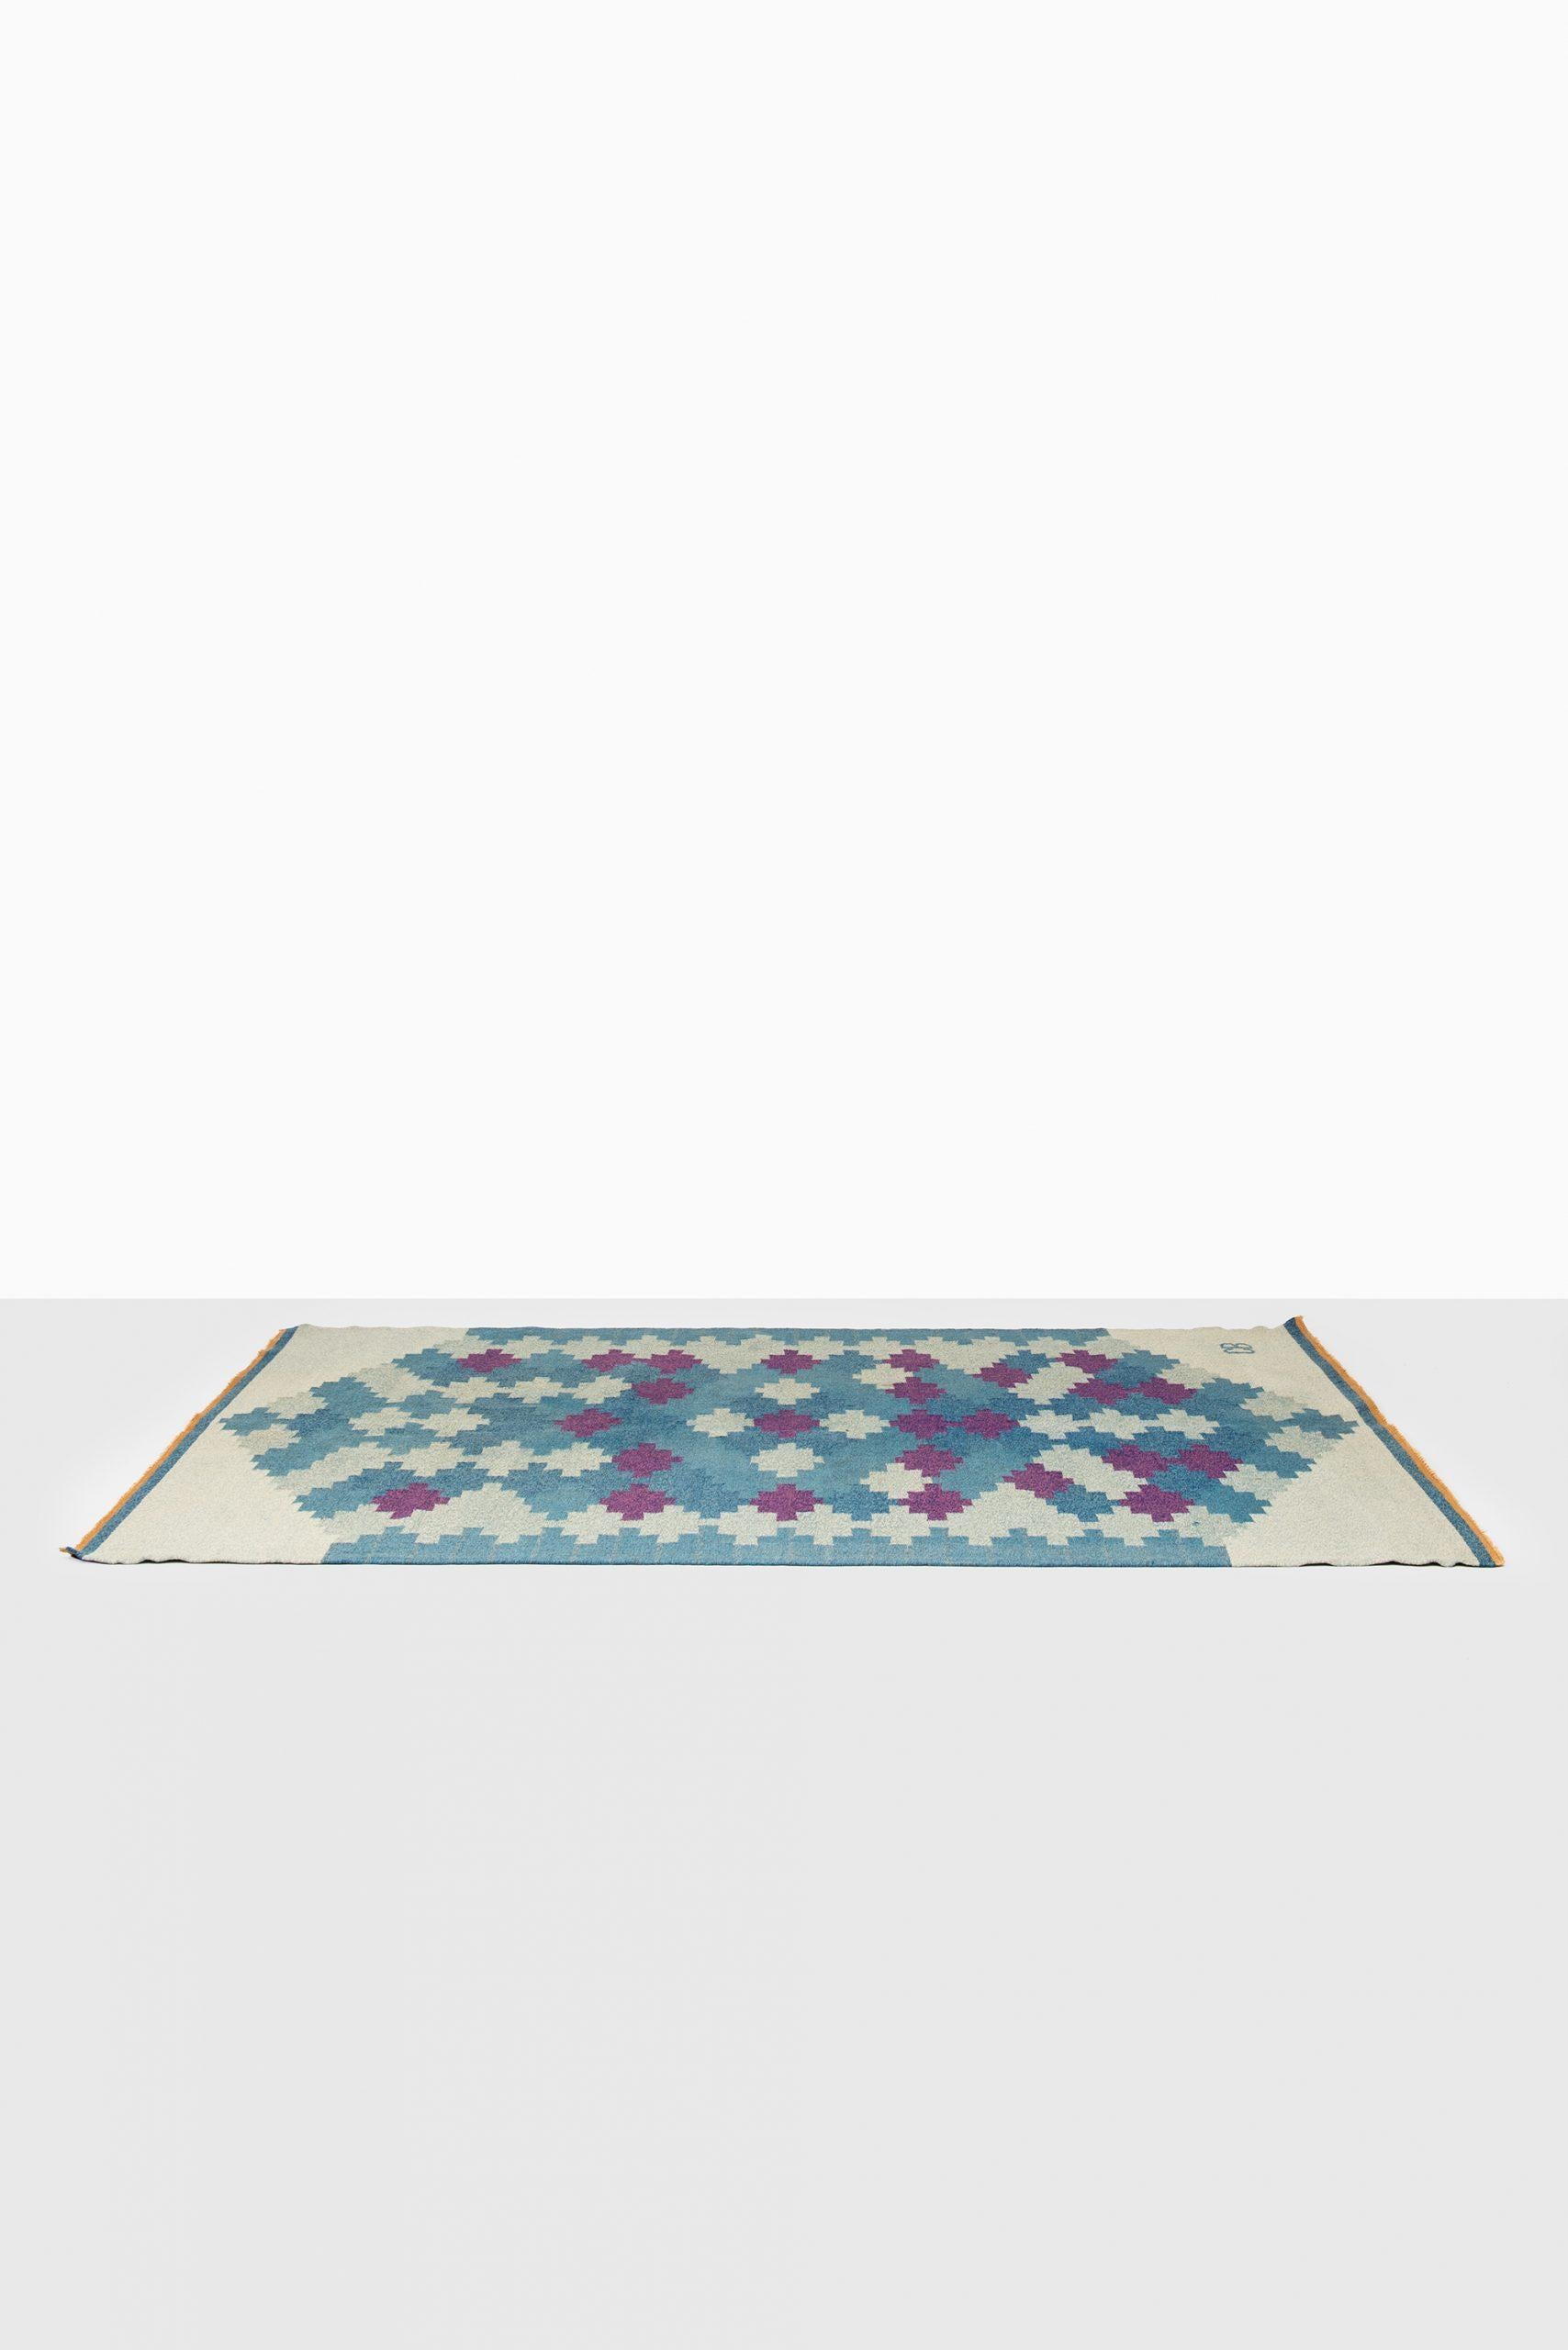 Large midcentury flat-weave carpet designed by unknown designer. Produced in Sweden. Signed CB.
  